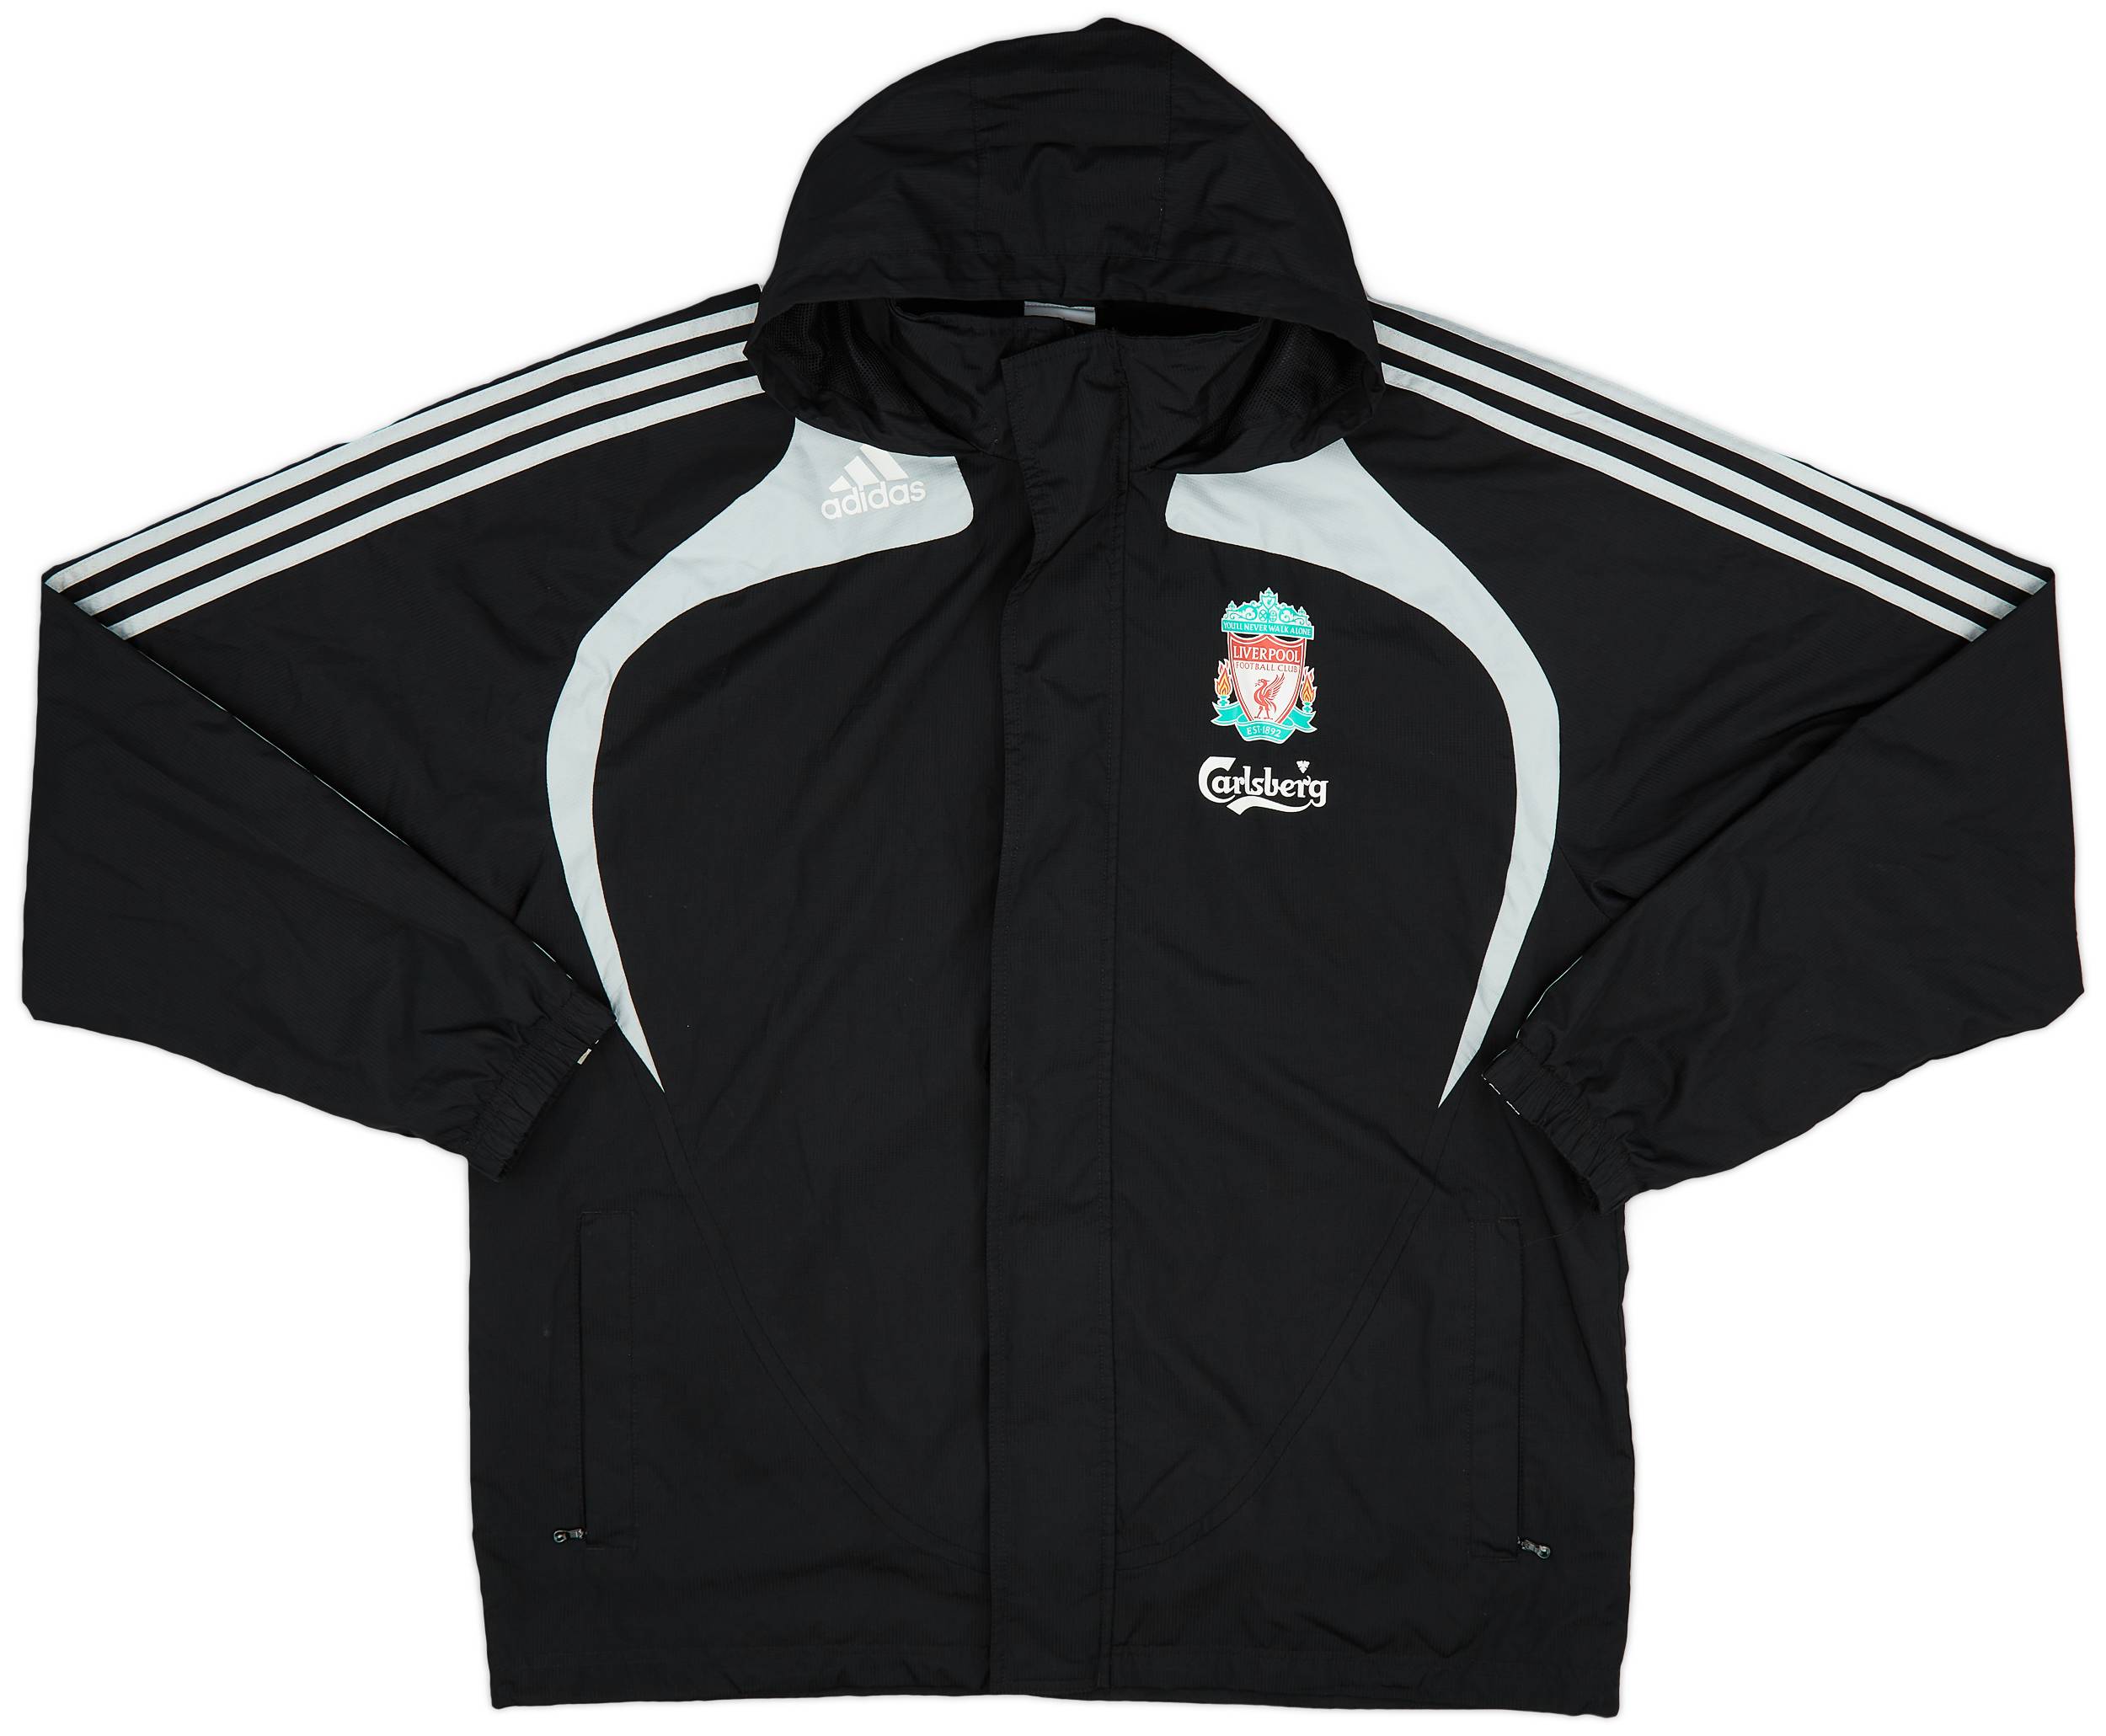 2008-09 Liverpool adidas Rain Jacket - 9/10 - (L)